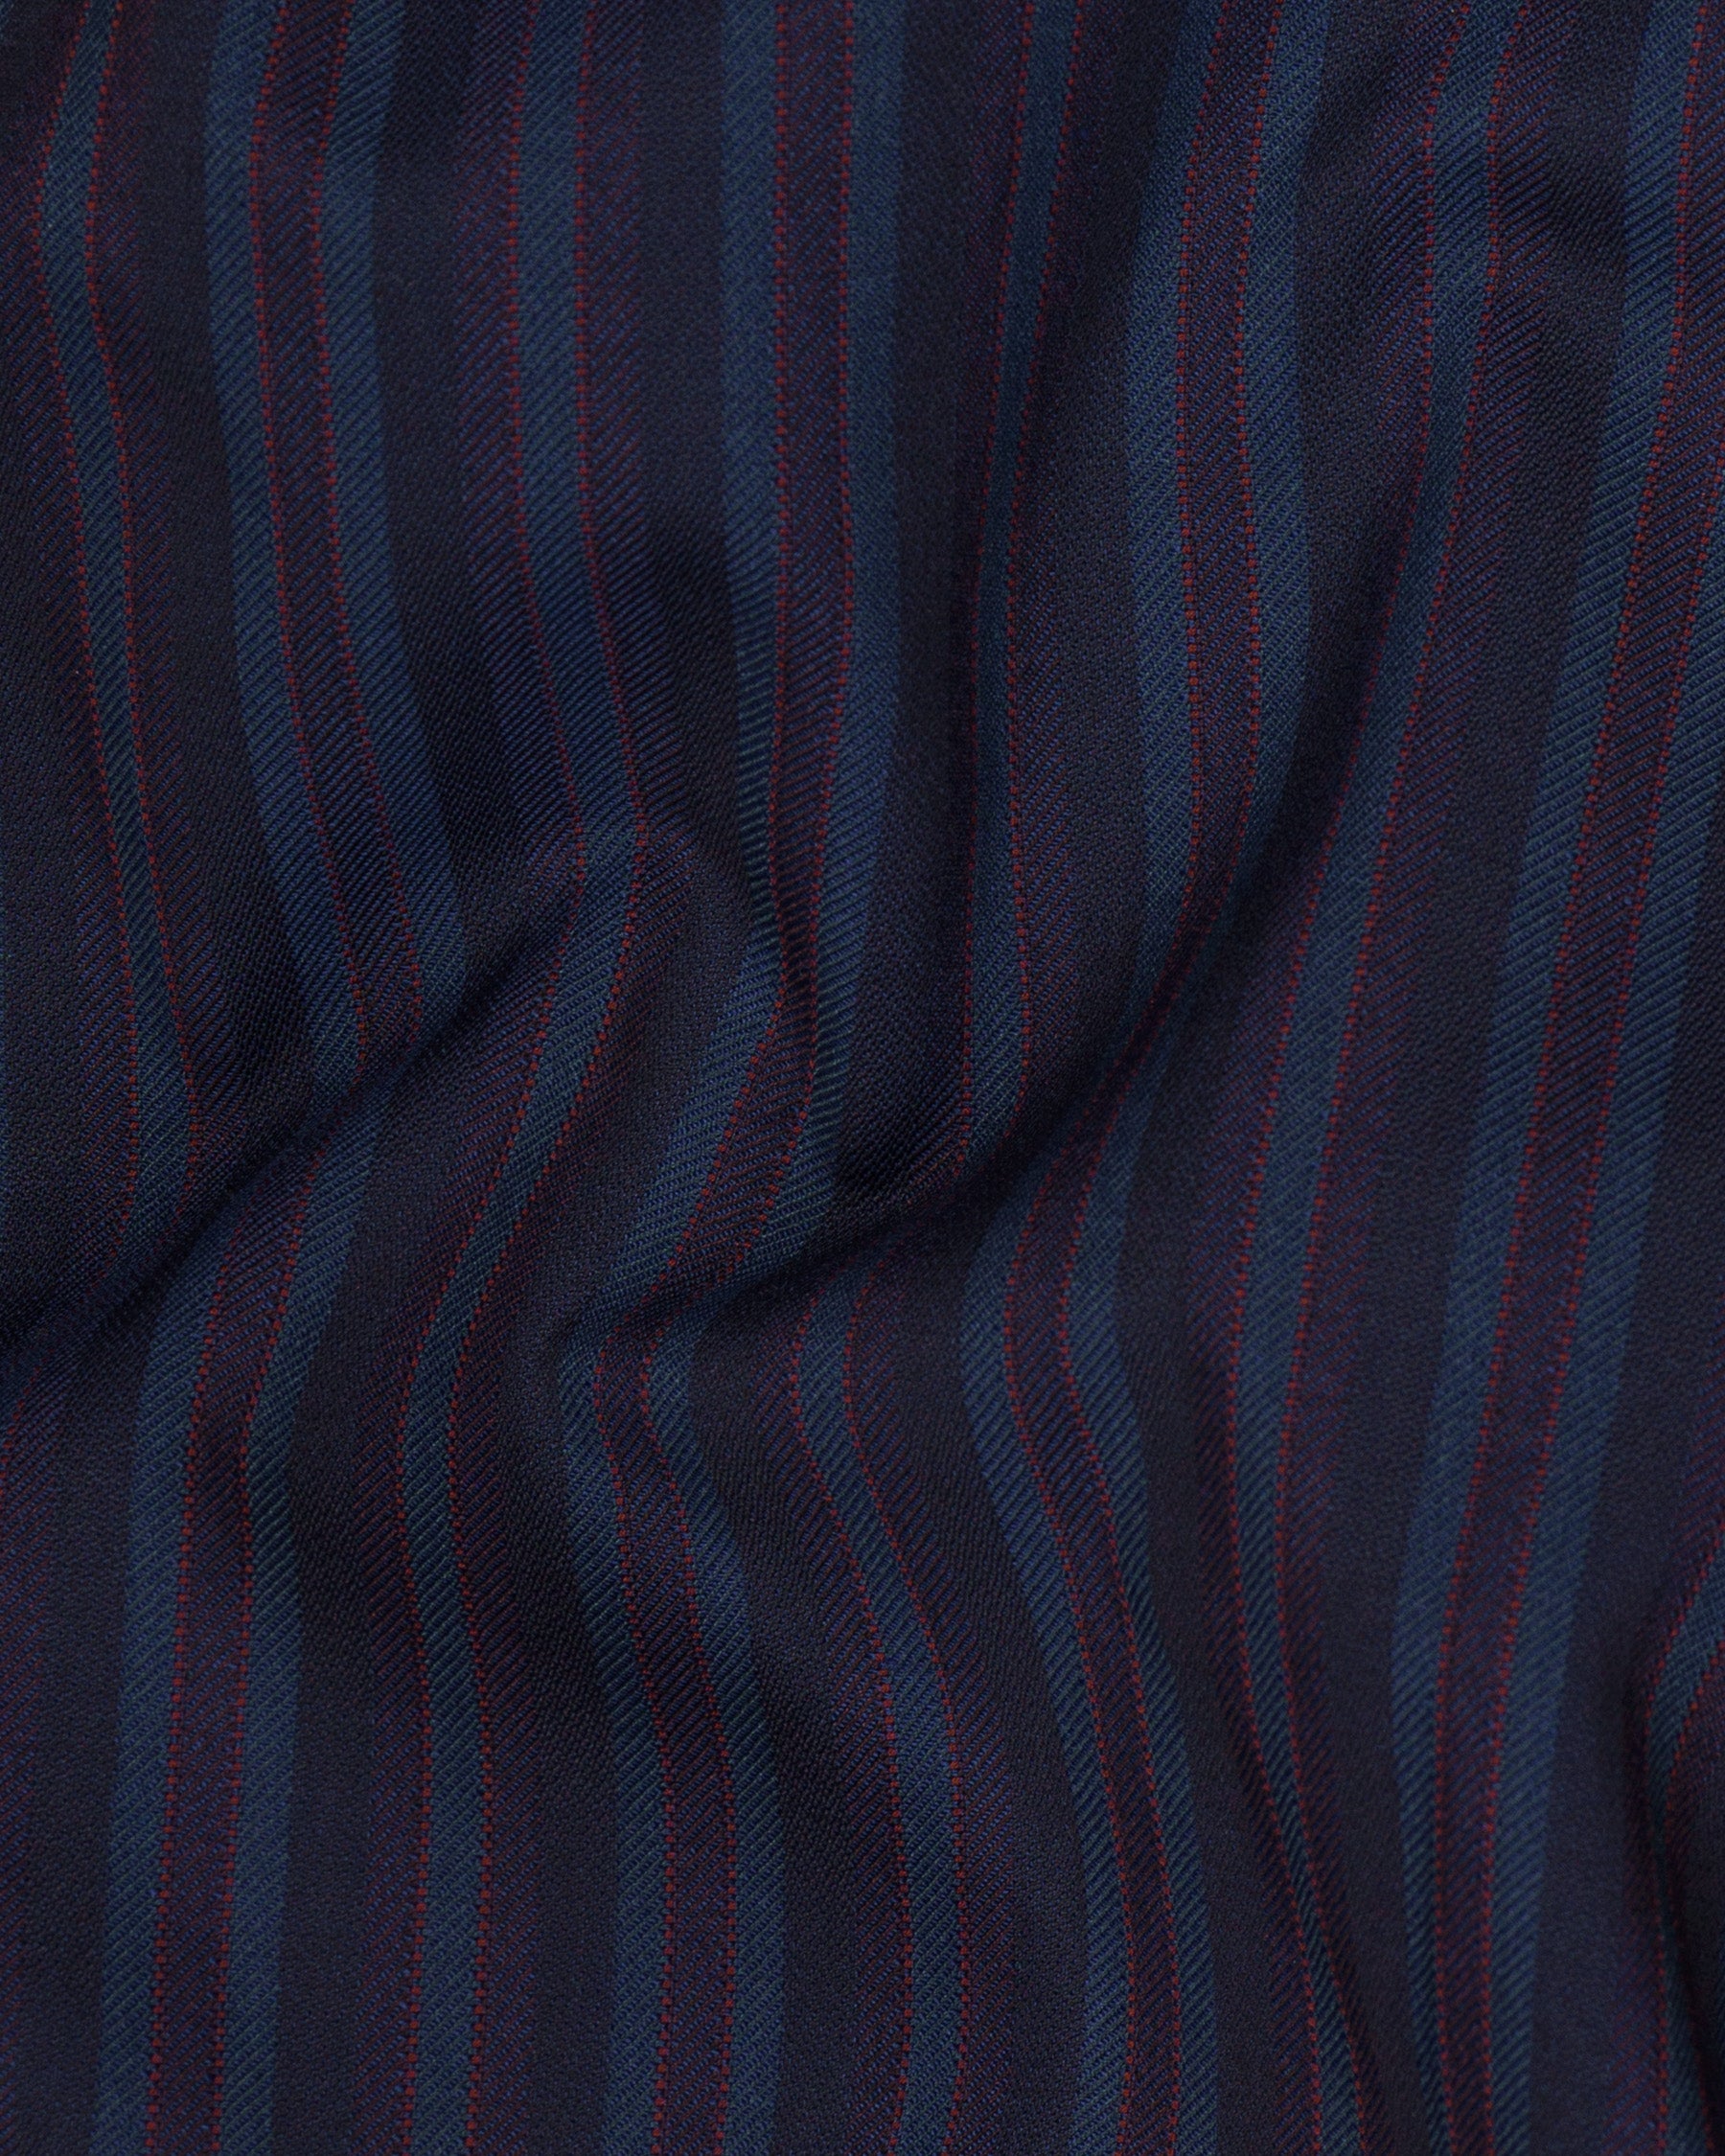 Licorice Blue Striped Wool Rich Pant T1539-28, T1539-30, T1539-32, T1539-34, T1539-36, T1539-38, T1539-40, T1539-42, T1539-44